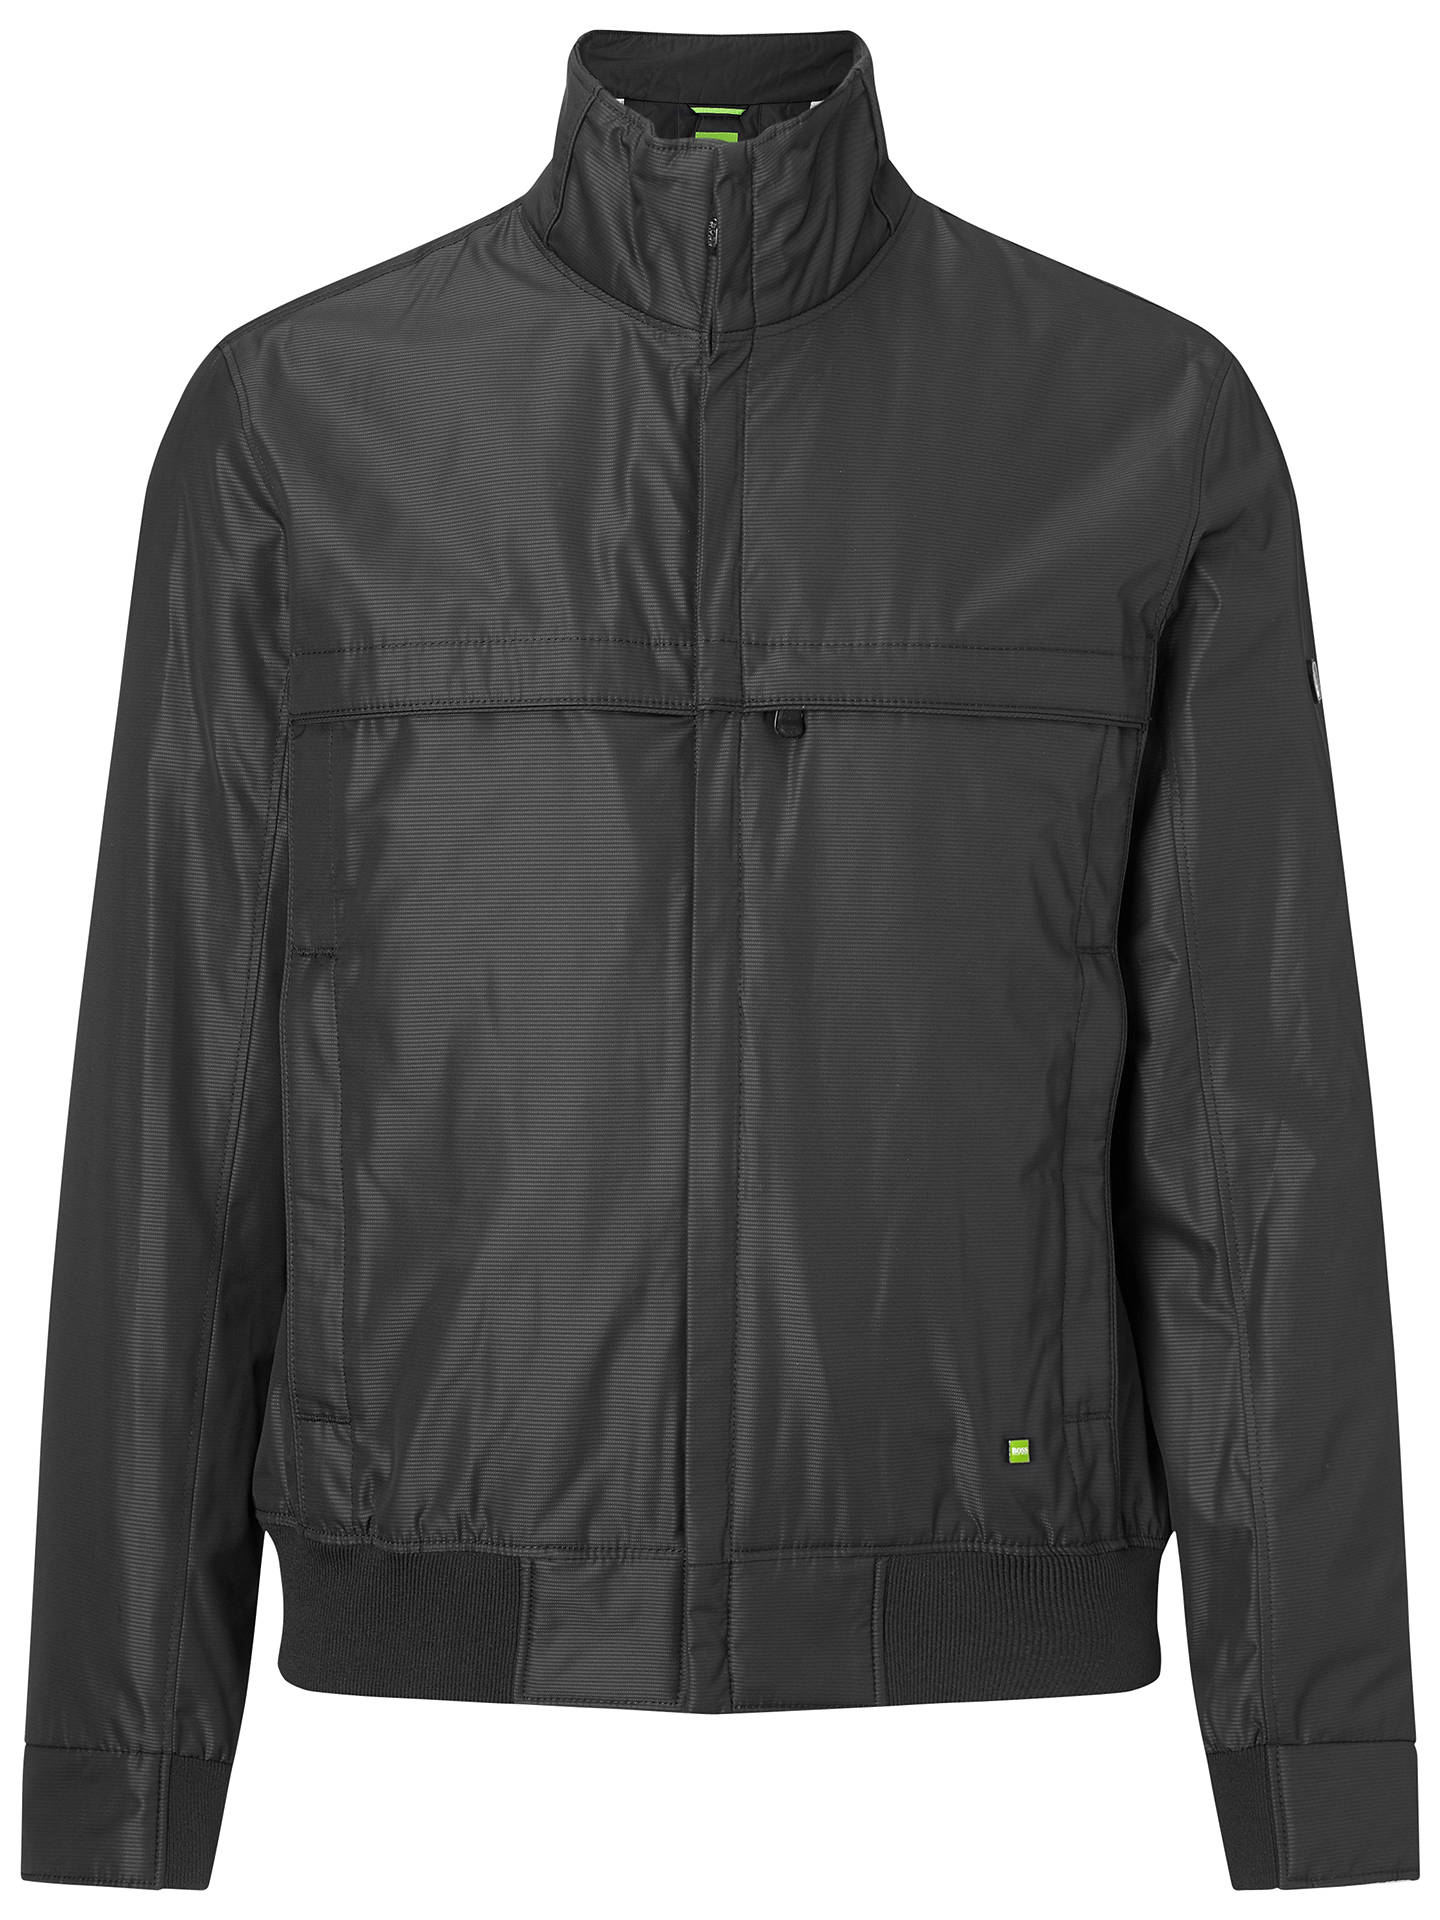 BOSS Green Jadon Jacket, Black at John Lewis & Partners